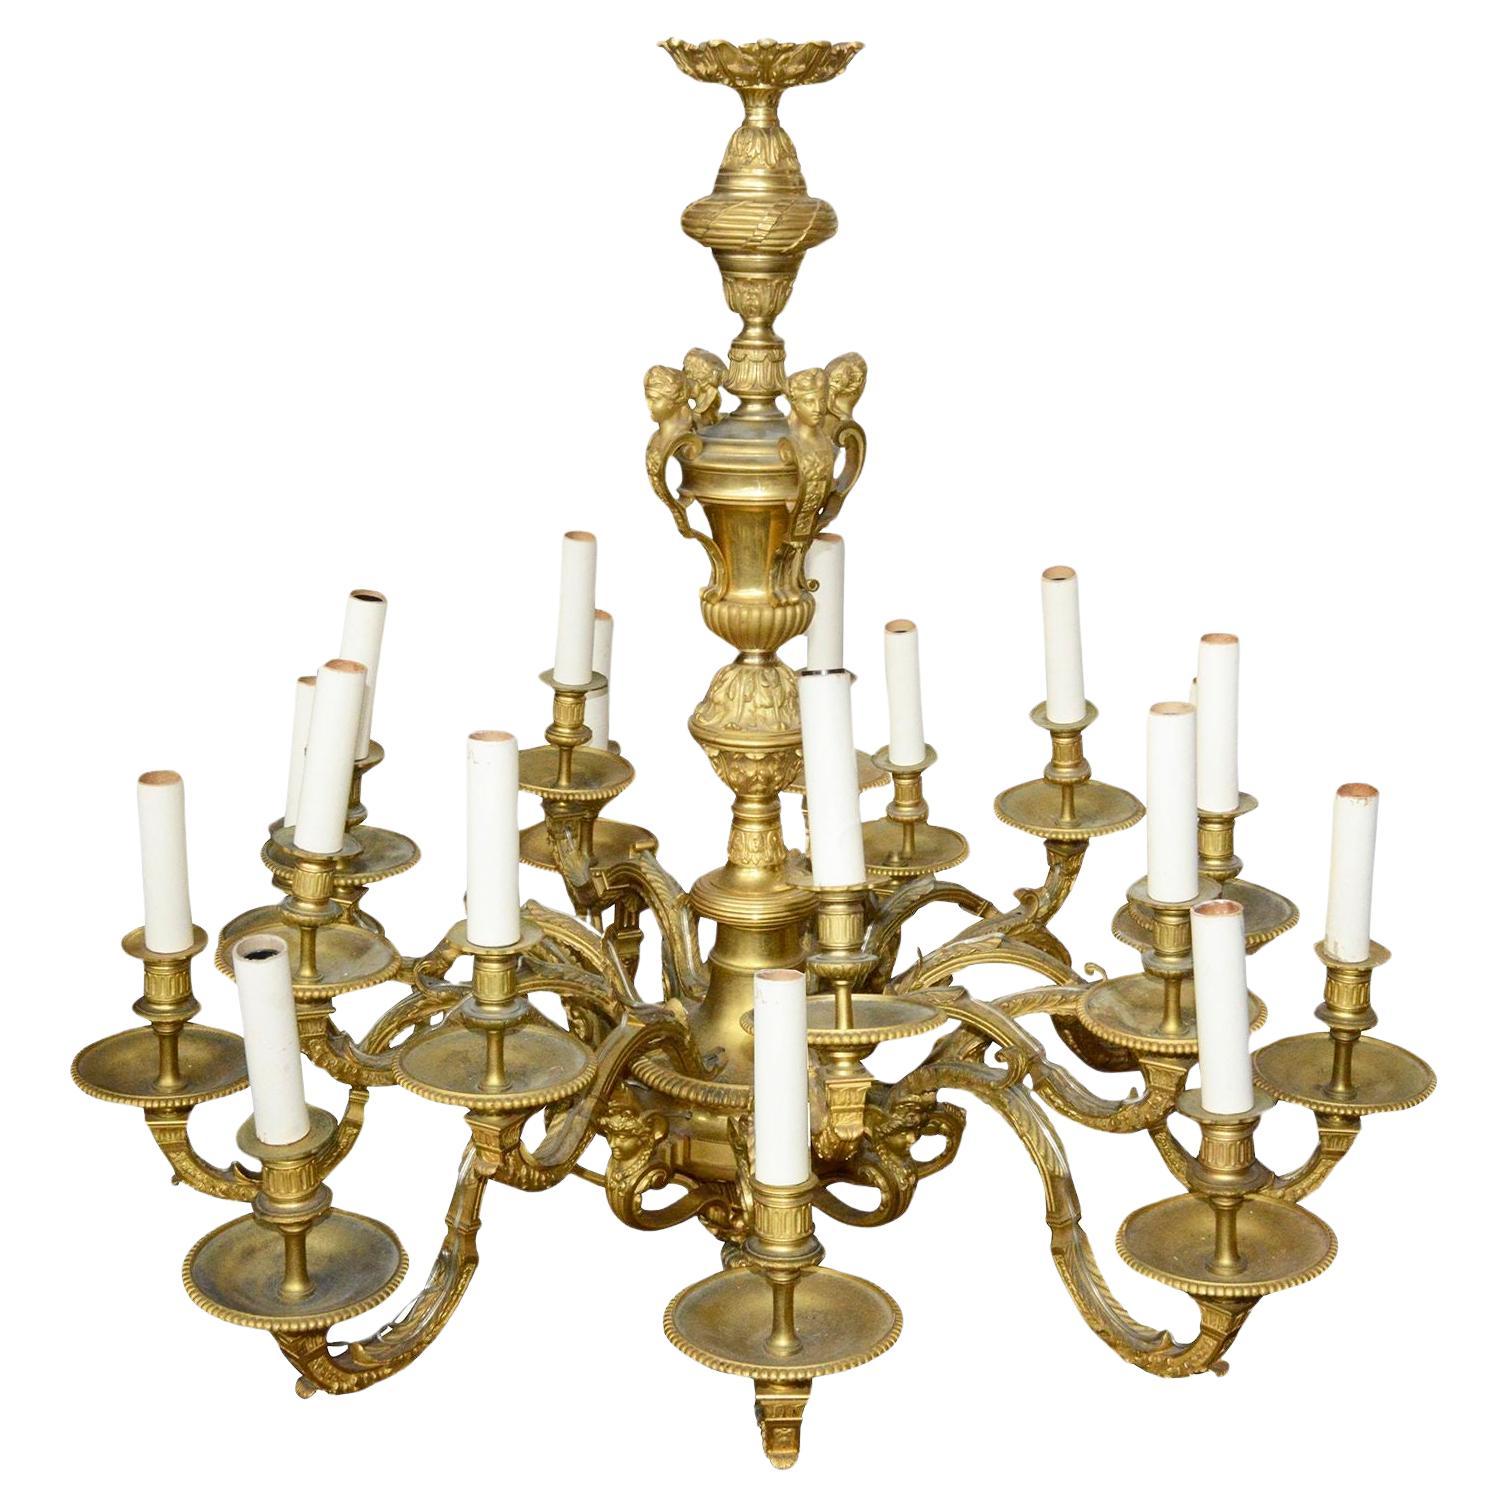 19th Century gilded Louis XVI style ormolu chandelier